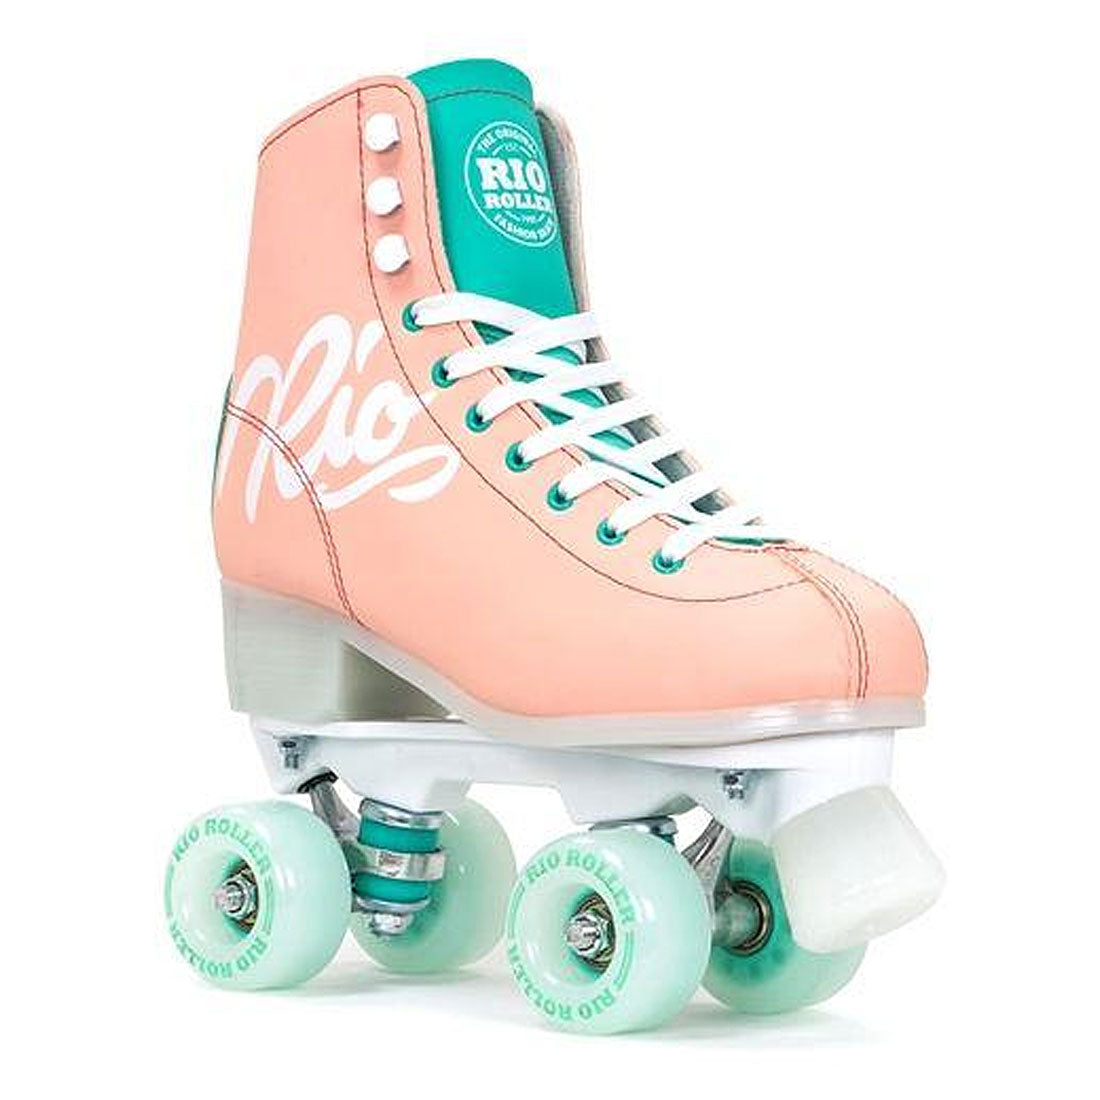 Rio Roller Script - Peach/Green Roller Skates